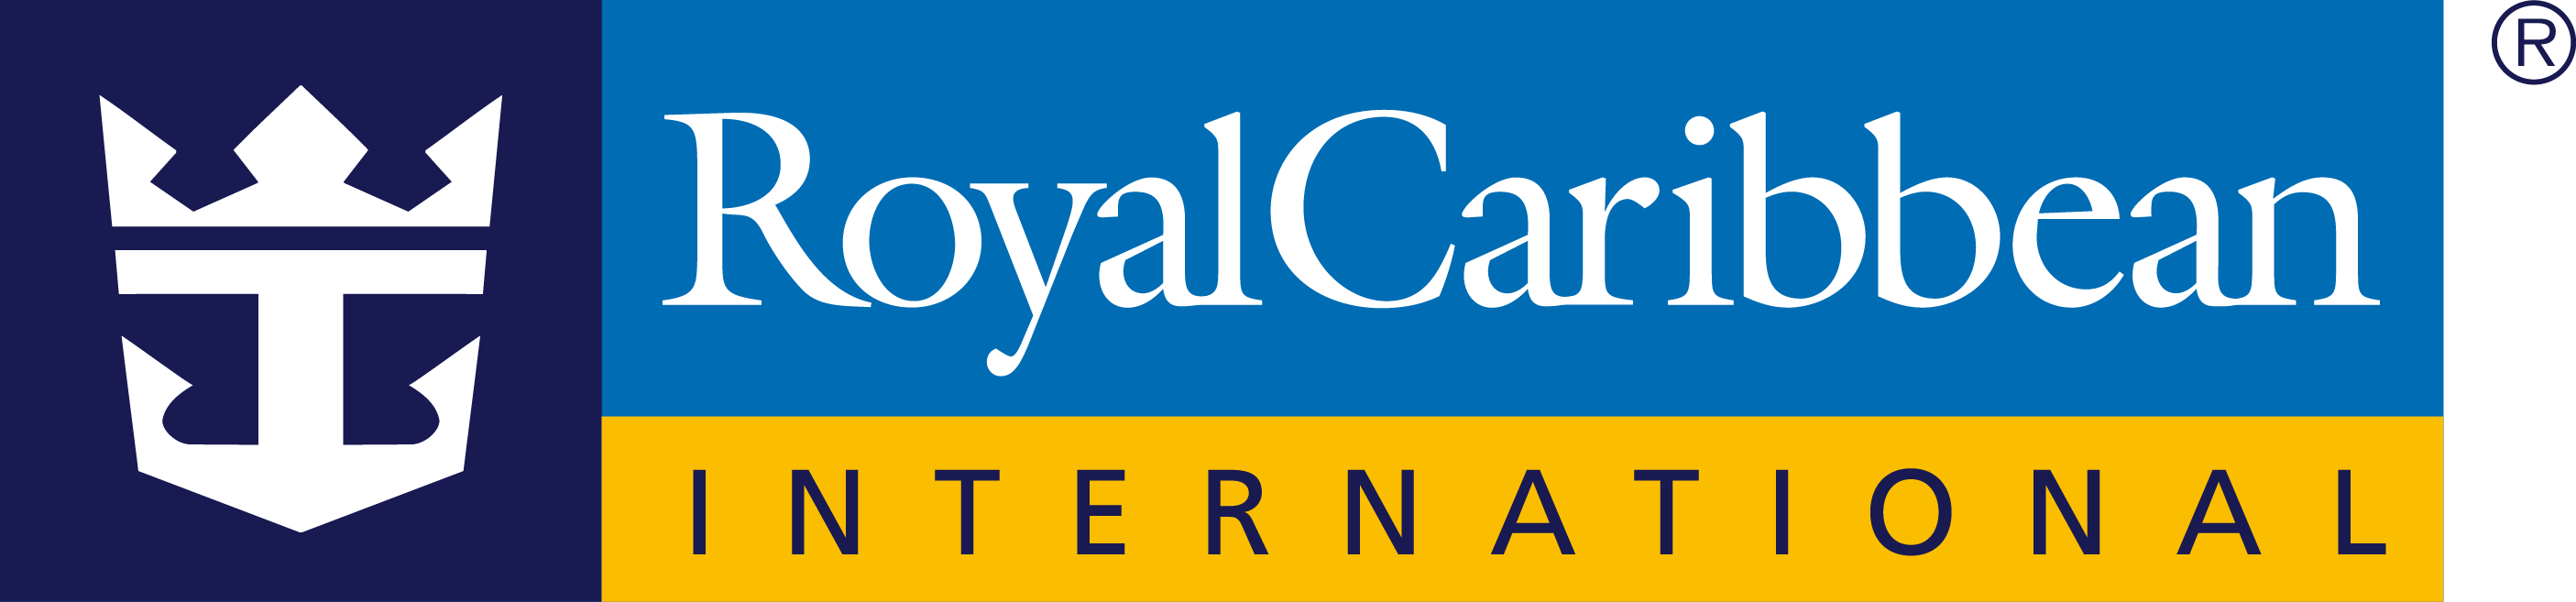 Royal Caribbean International Logo png